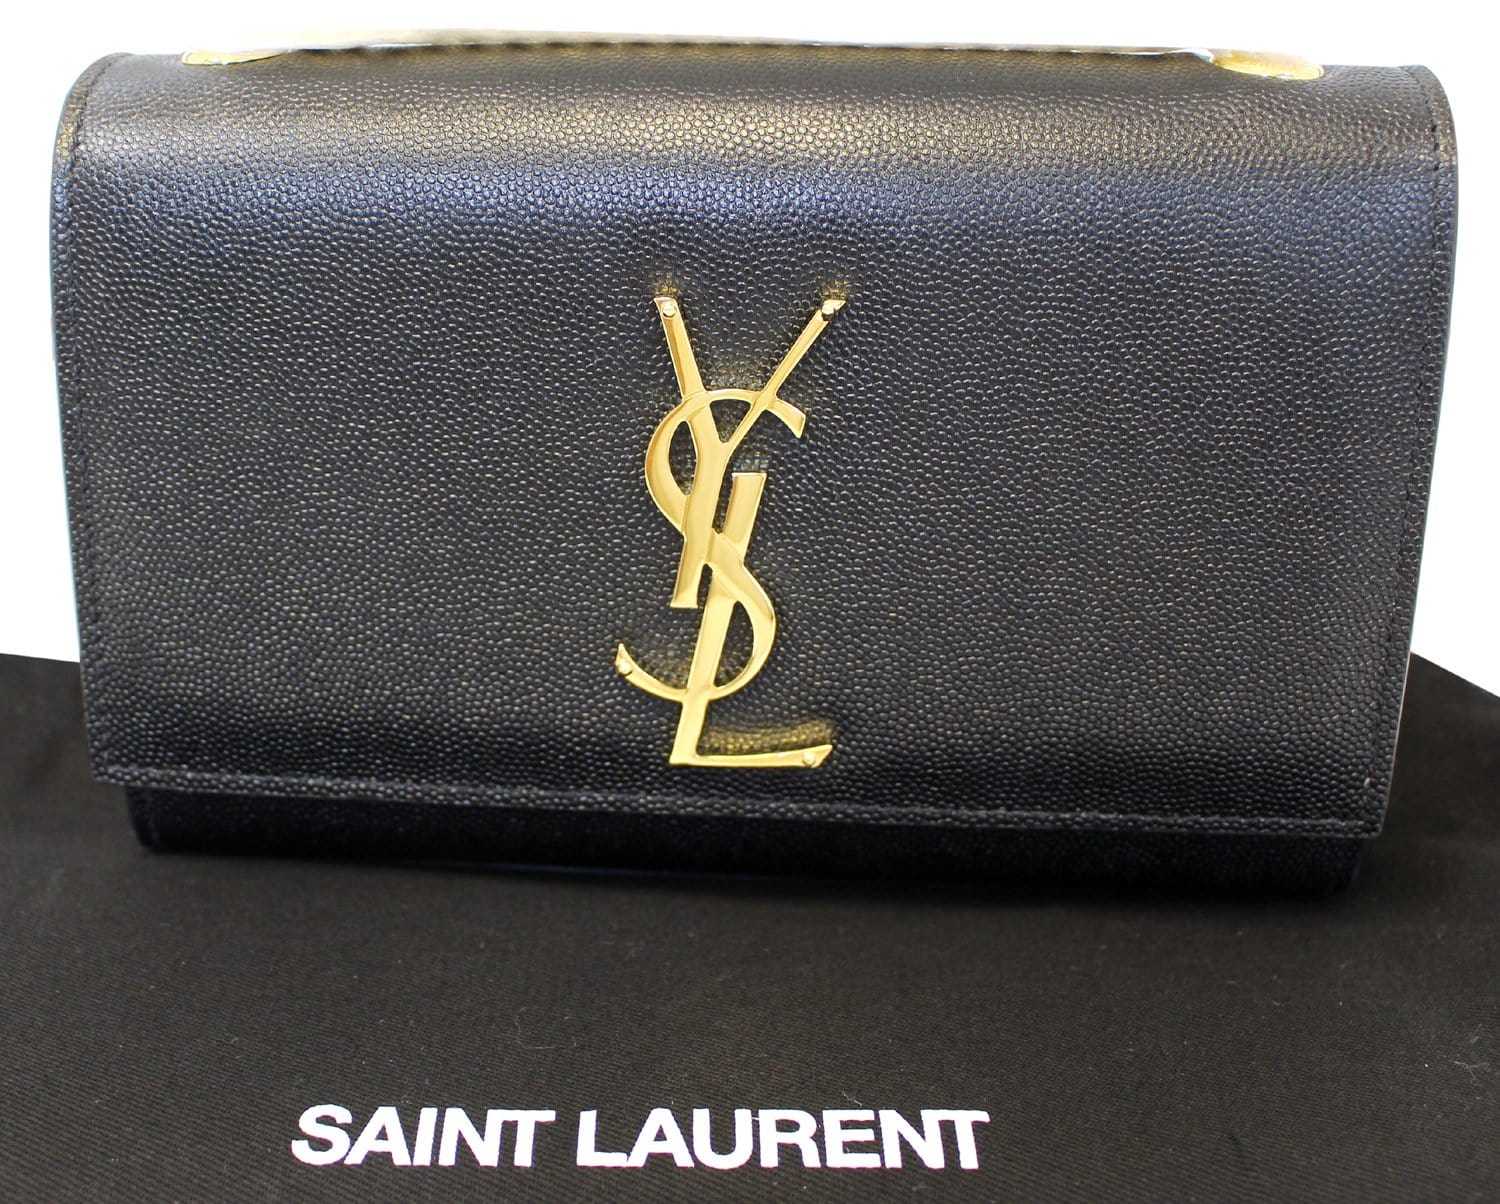 YSL Yves Saint Laurent Clutch Bag Second Bag Black 11x8x1in